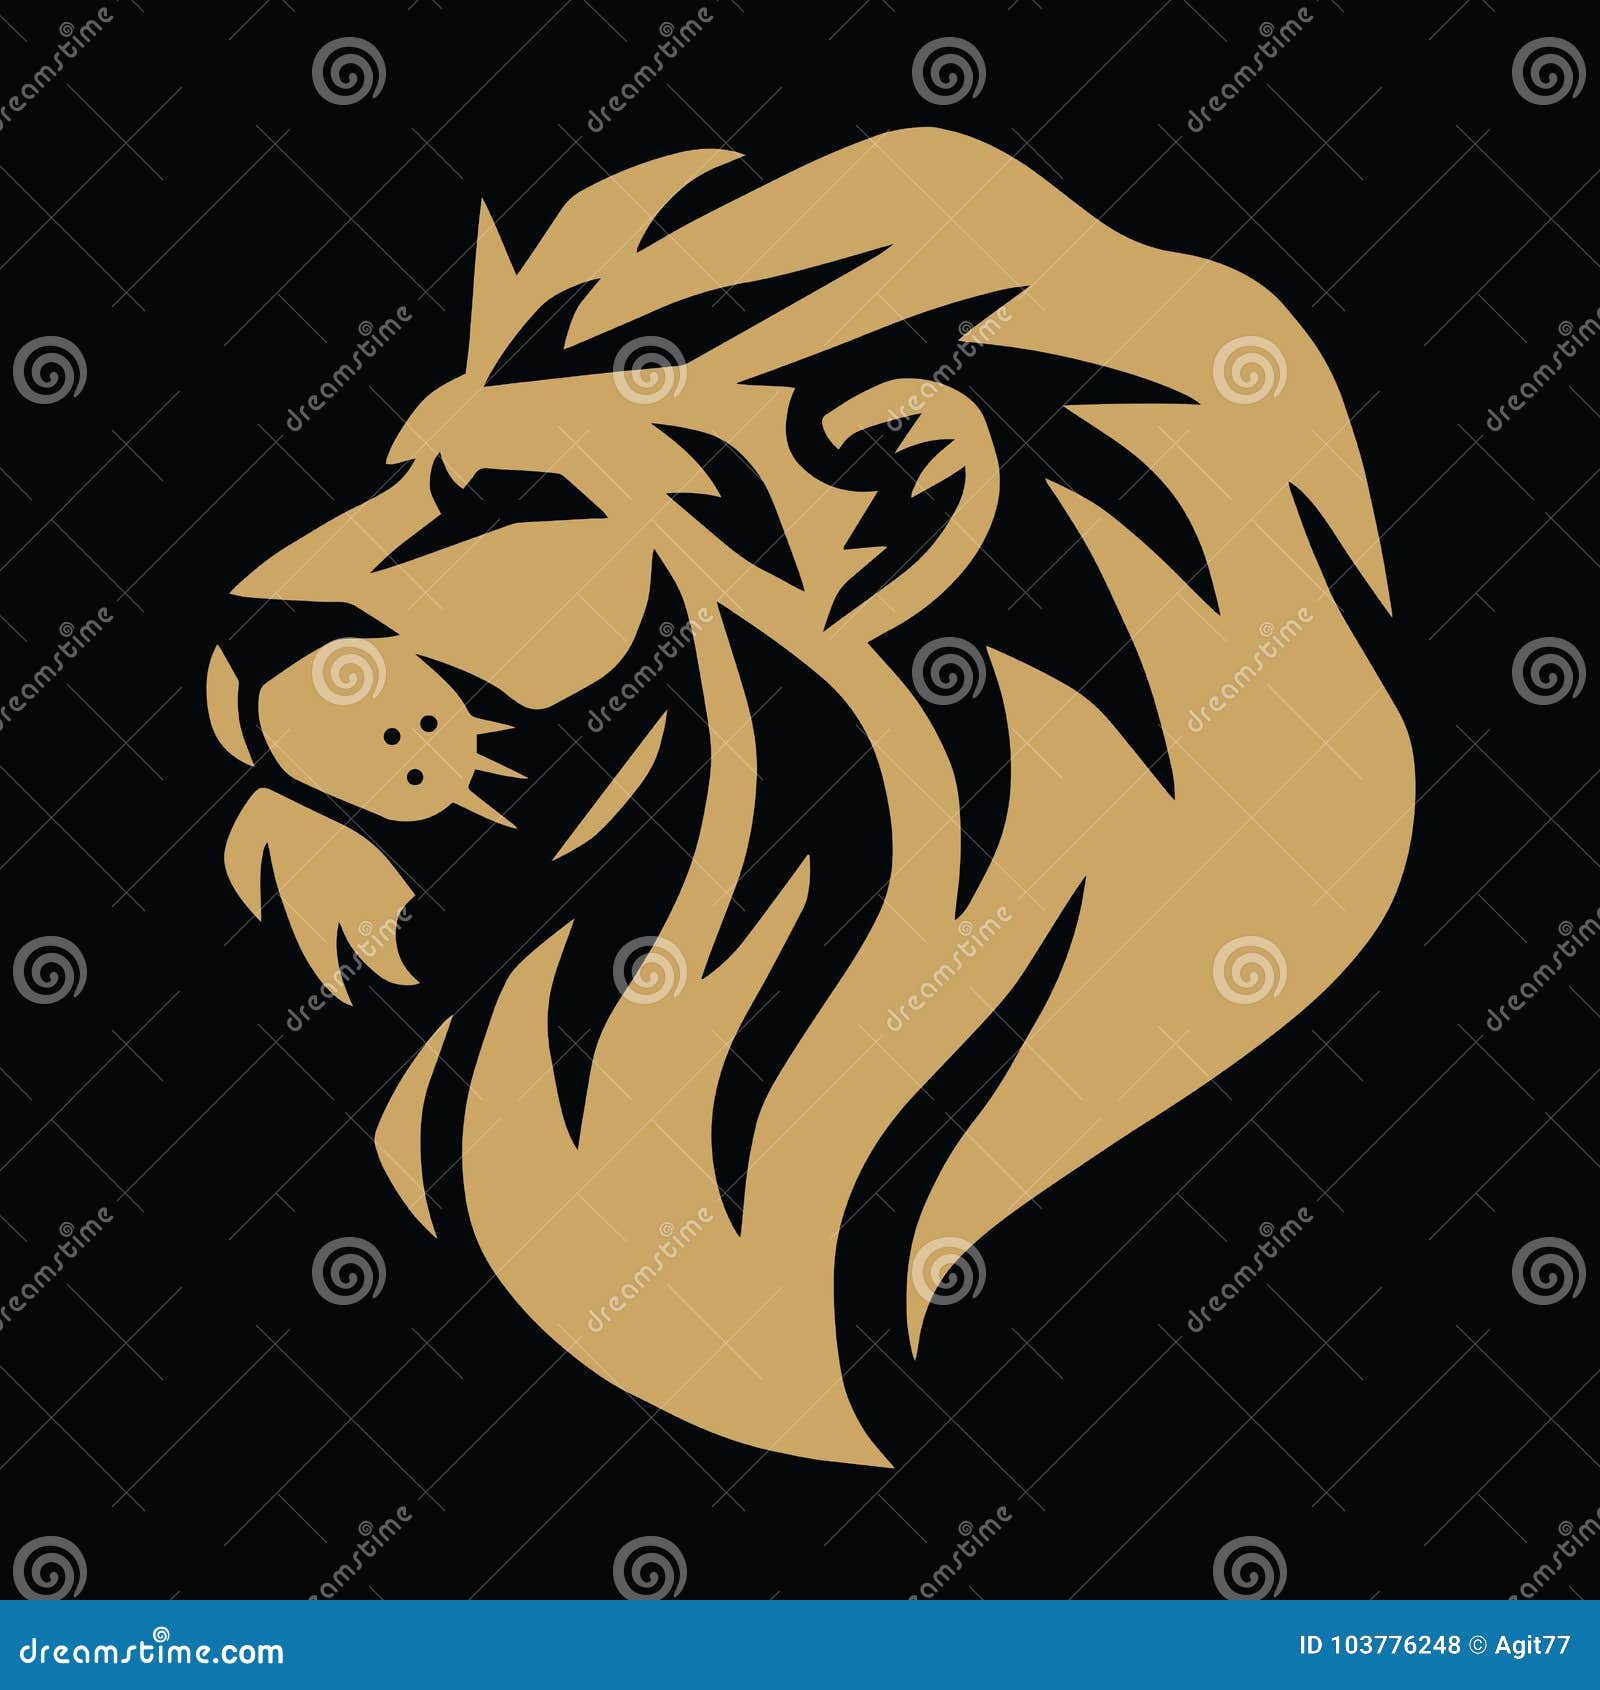 Golden Lion Variation 2 | Lion logo, Lion art, Lion images